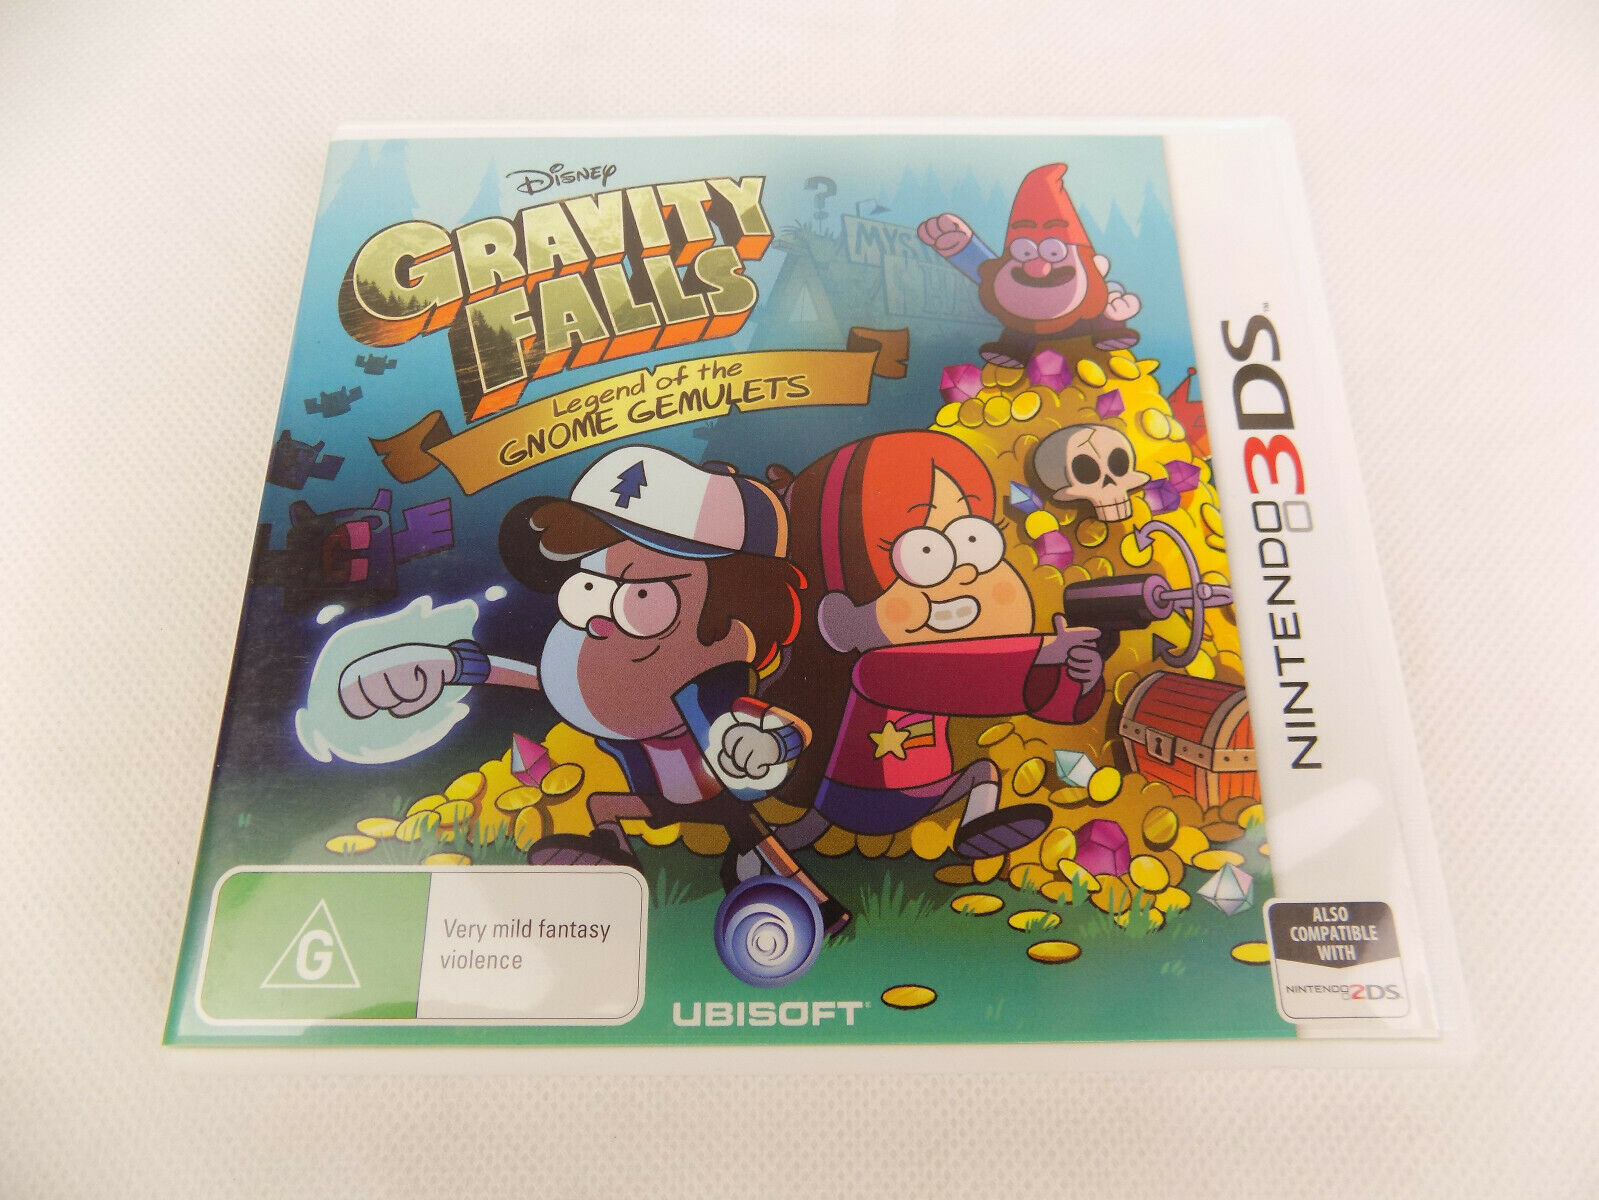 Gravity Falls - Nintendo 3DS, Nintendo 3DS